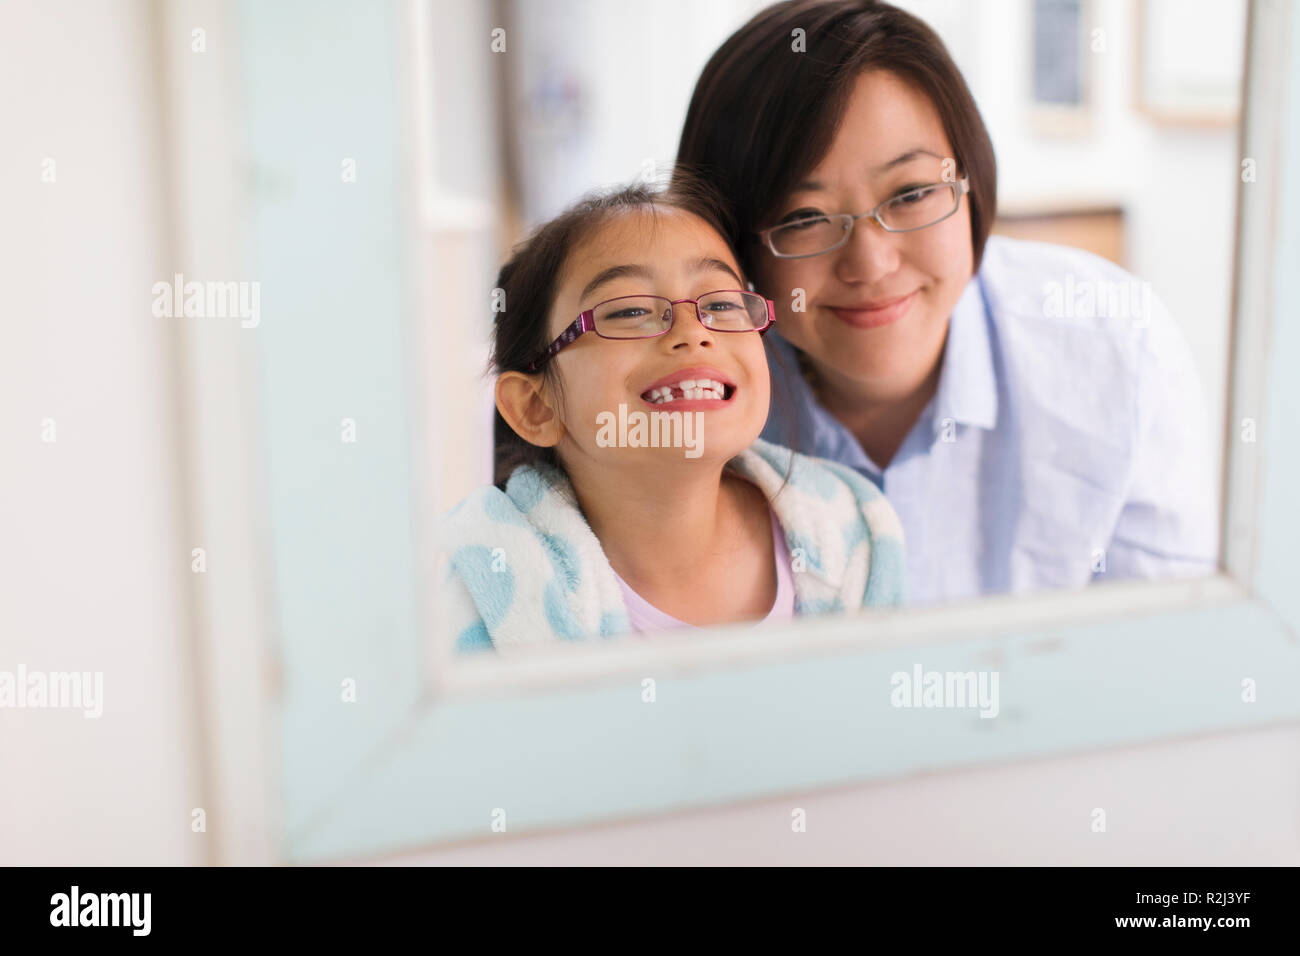 Mother watching daughter showing teeth in bathroom mirror Stock Photo